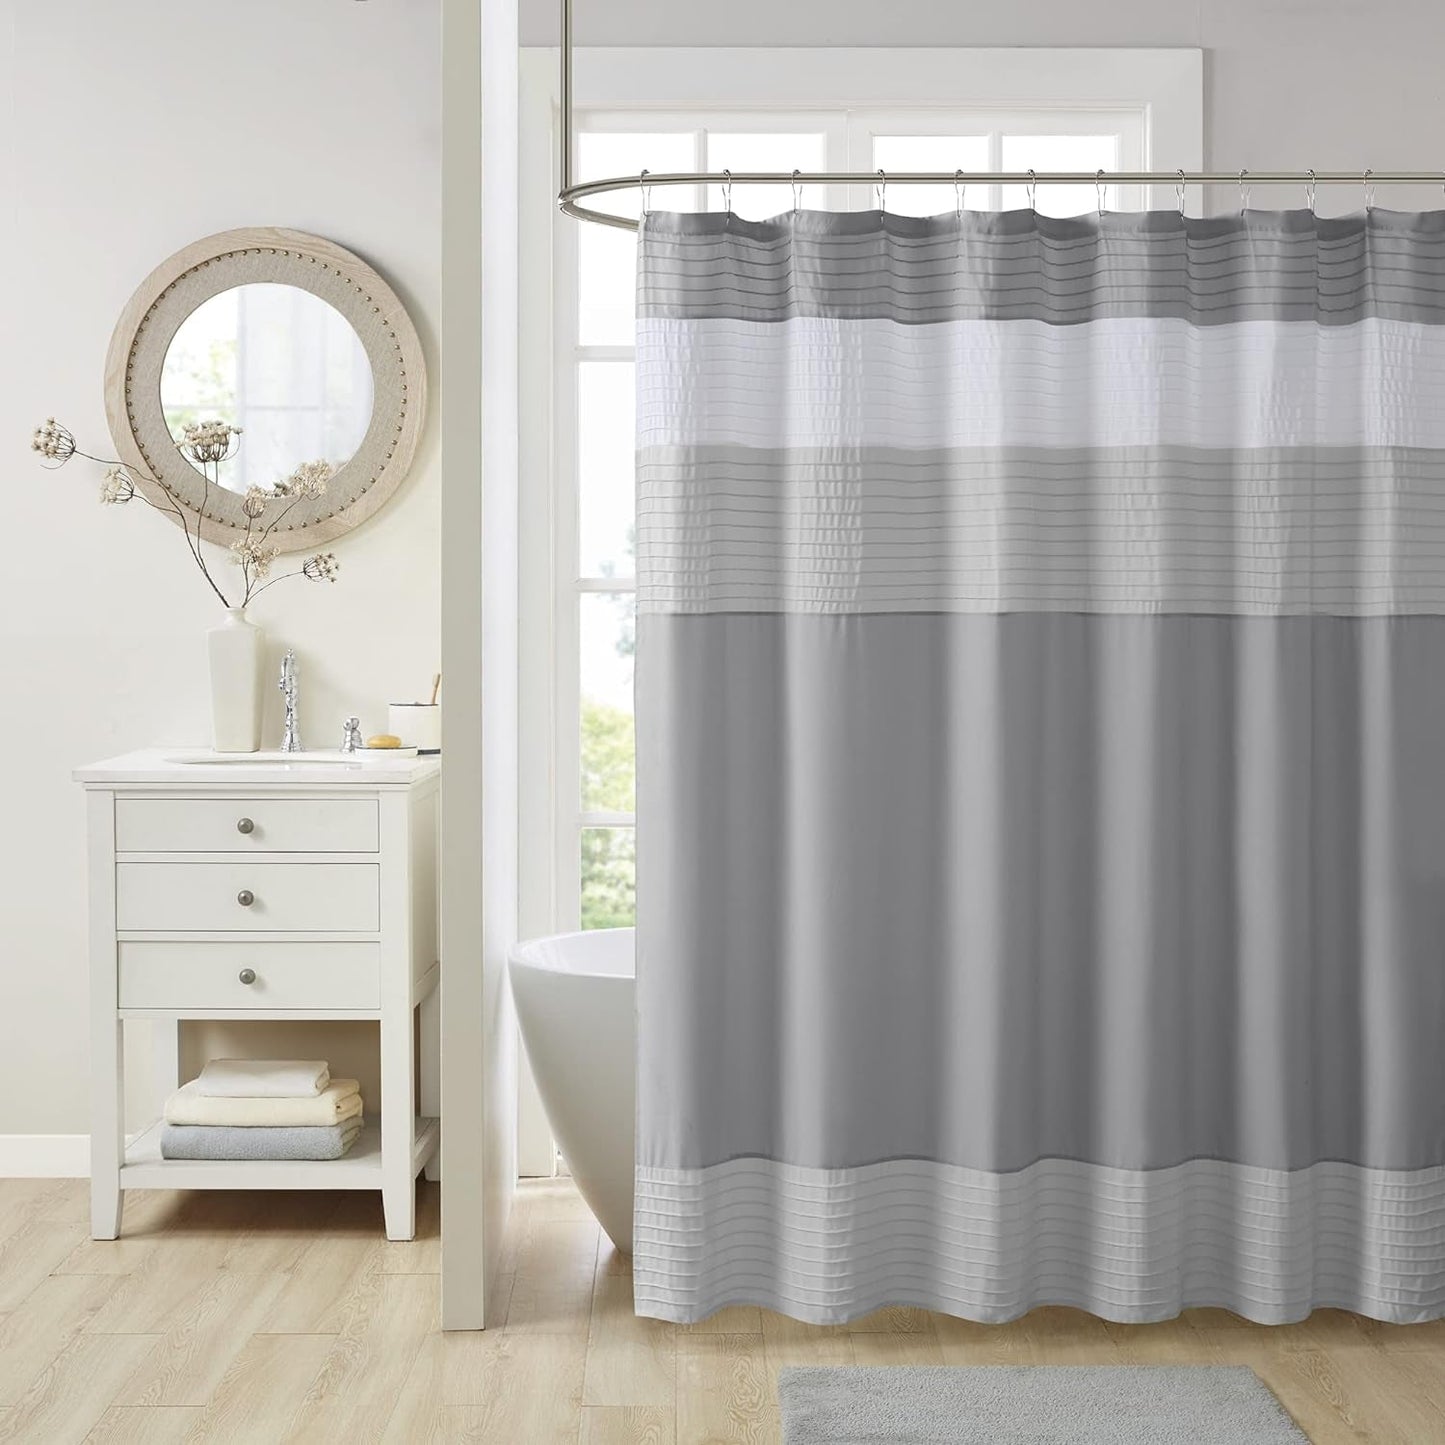 Comfort Spaces Windsor Bathroom Shower Pieced Ruffle Pattern Modern Elegant Microfiber Fabric Bath Curtains, 72X72, Black